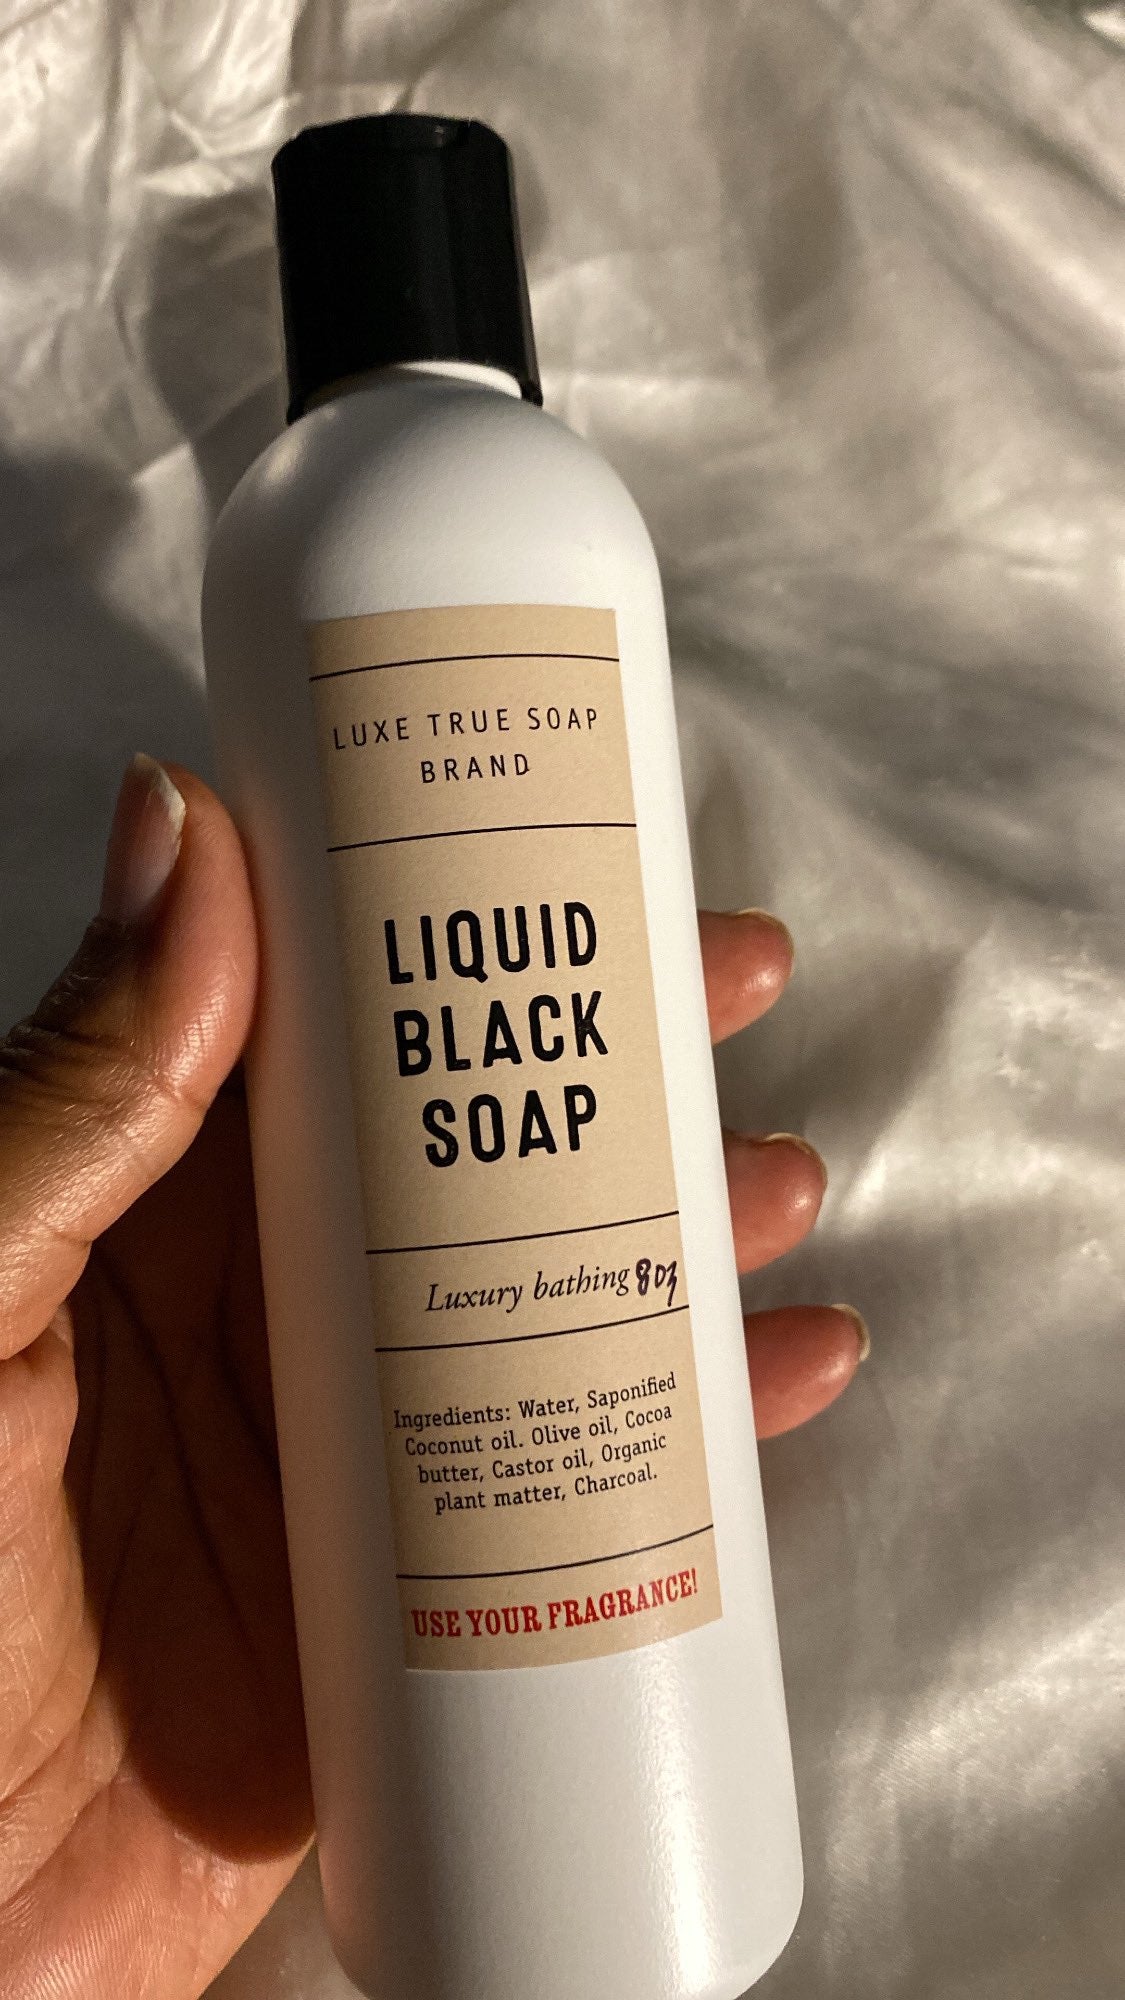 Luxe True Soap liquid black soap